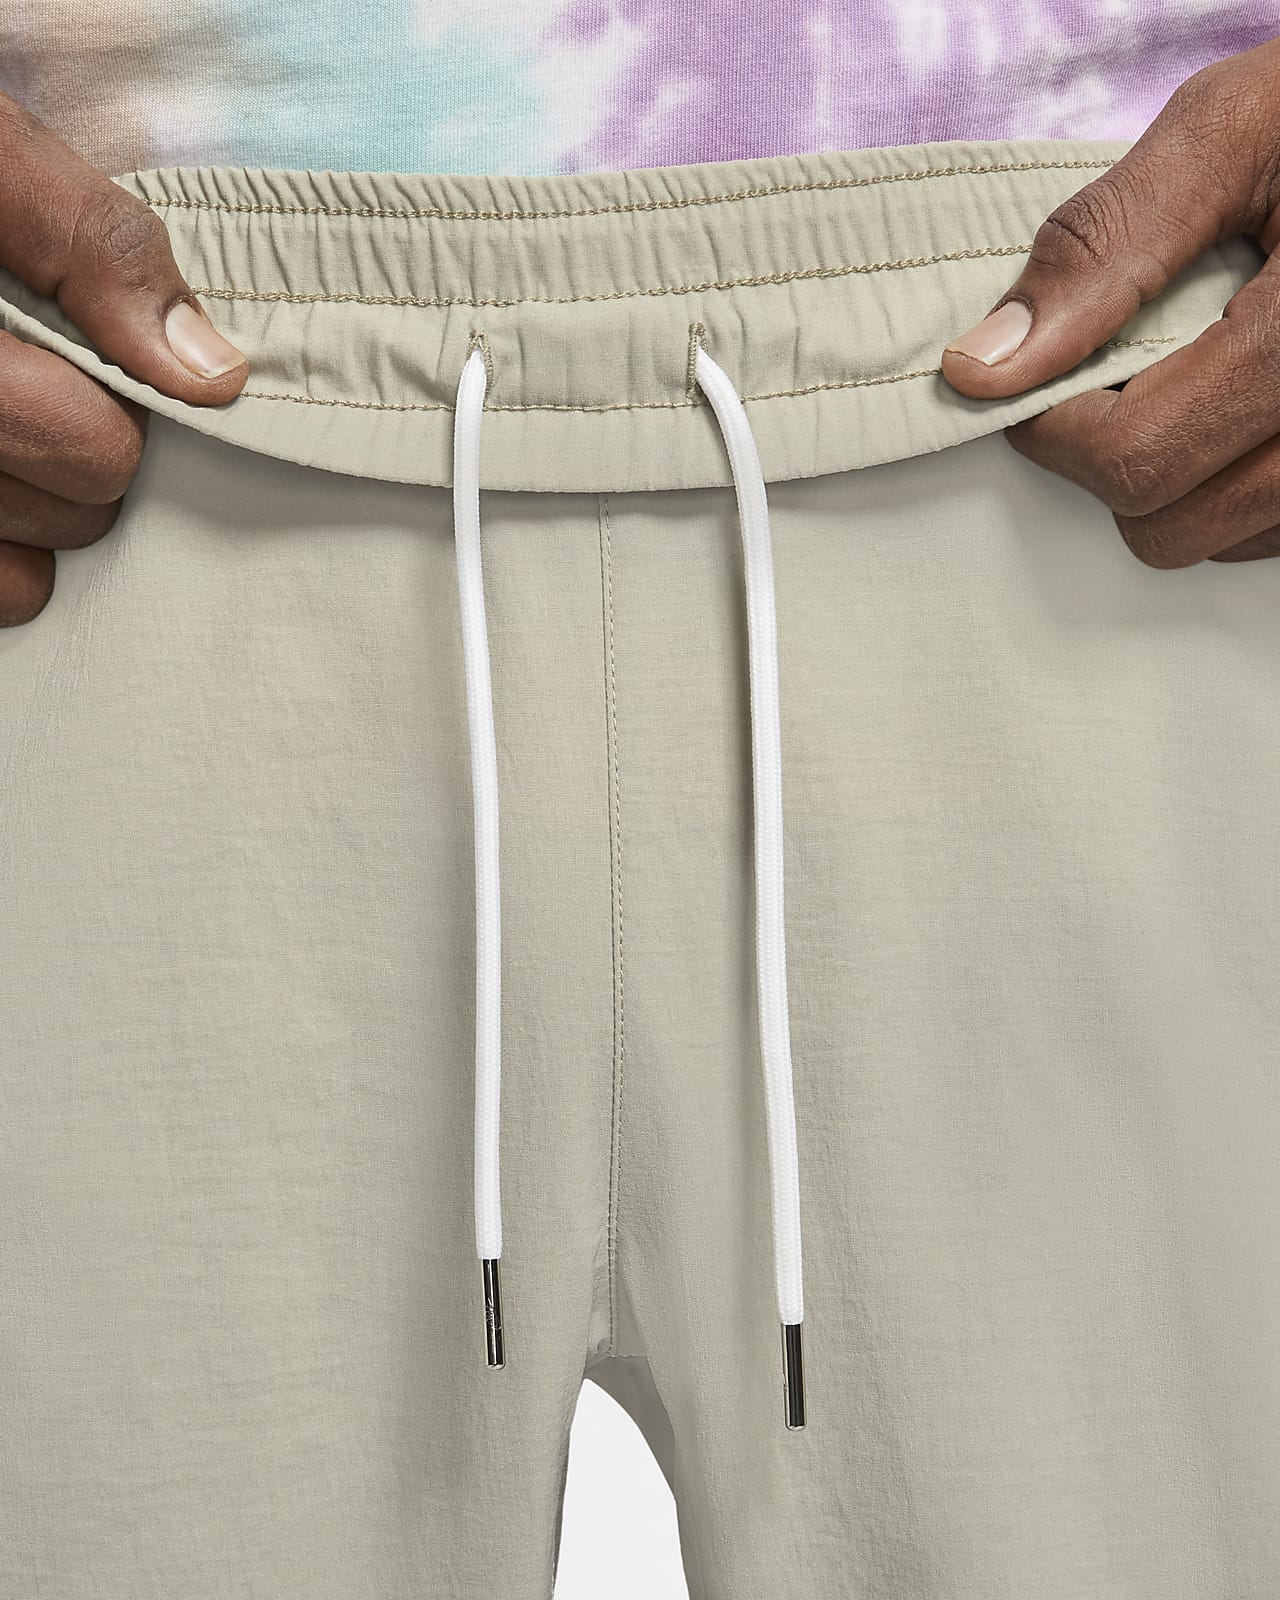 nike men's pants with zipper pockets